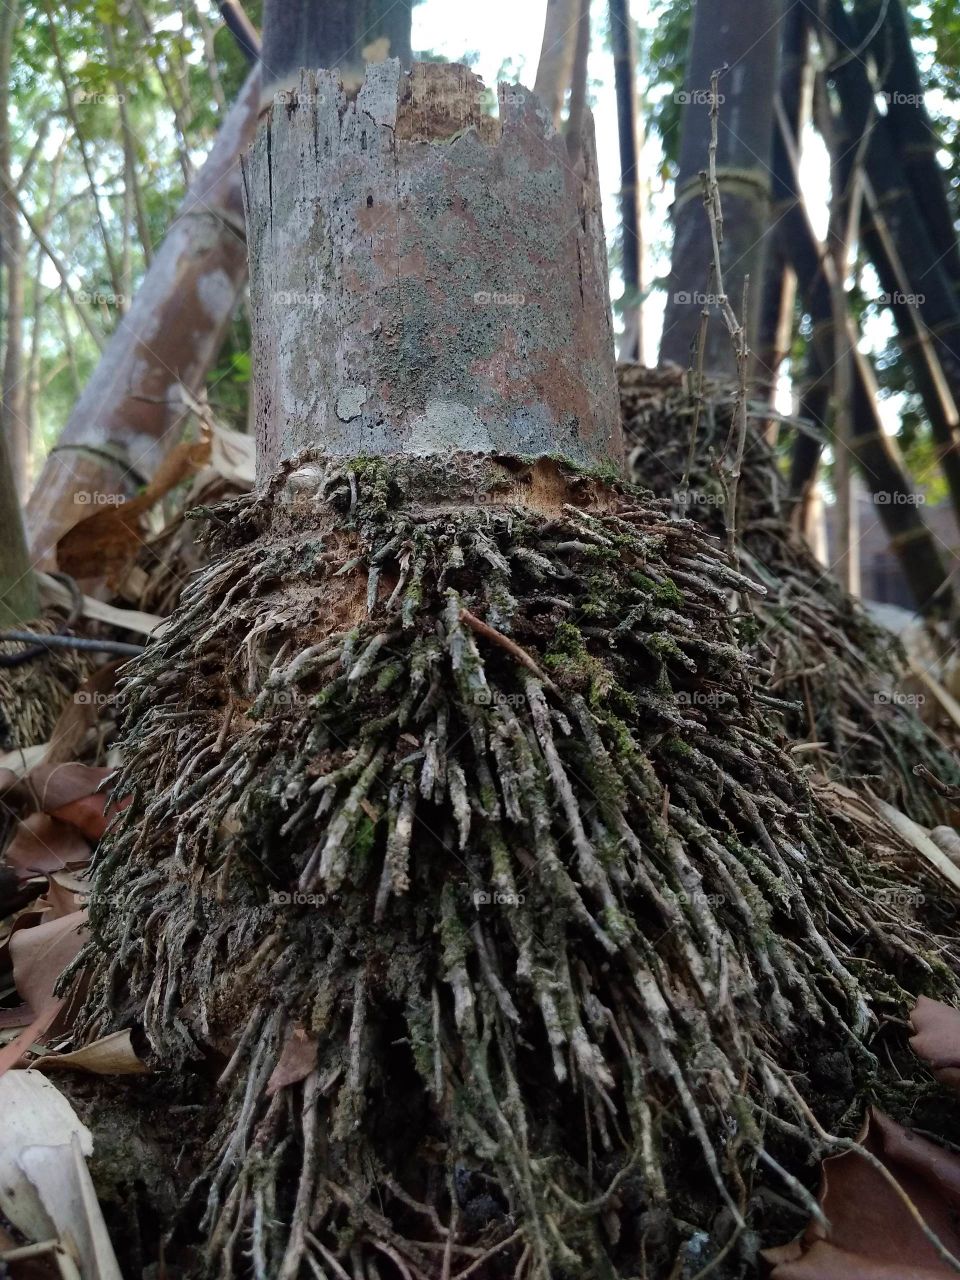 akar bambu yang tampak seperti duri